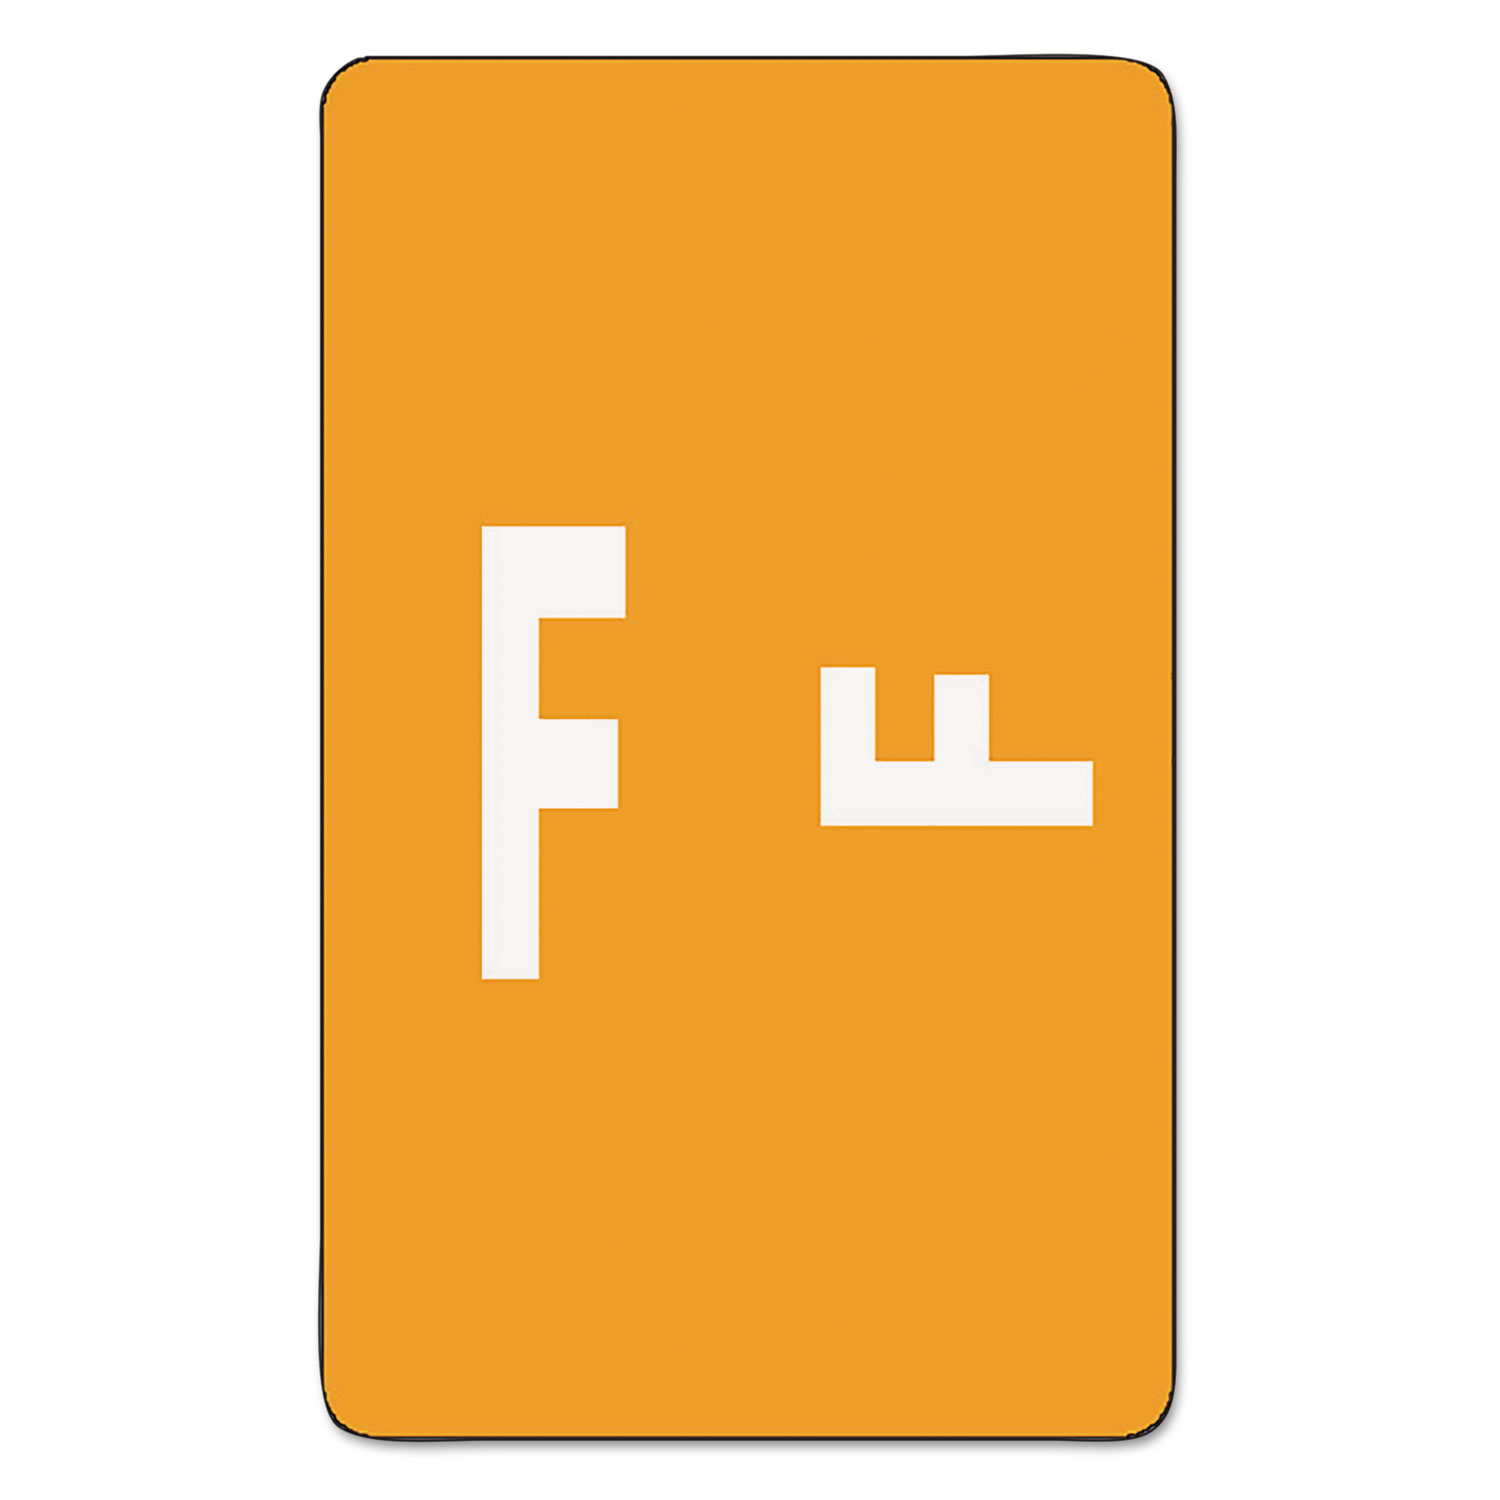  Smead 67176 AlphaZ Color-Coded Second Letter Alphabetical Labels, F, 1 x 1.63, Orange, 10/Sheet, 10 Sheets/Pack (SMD67176) 